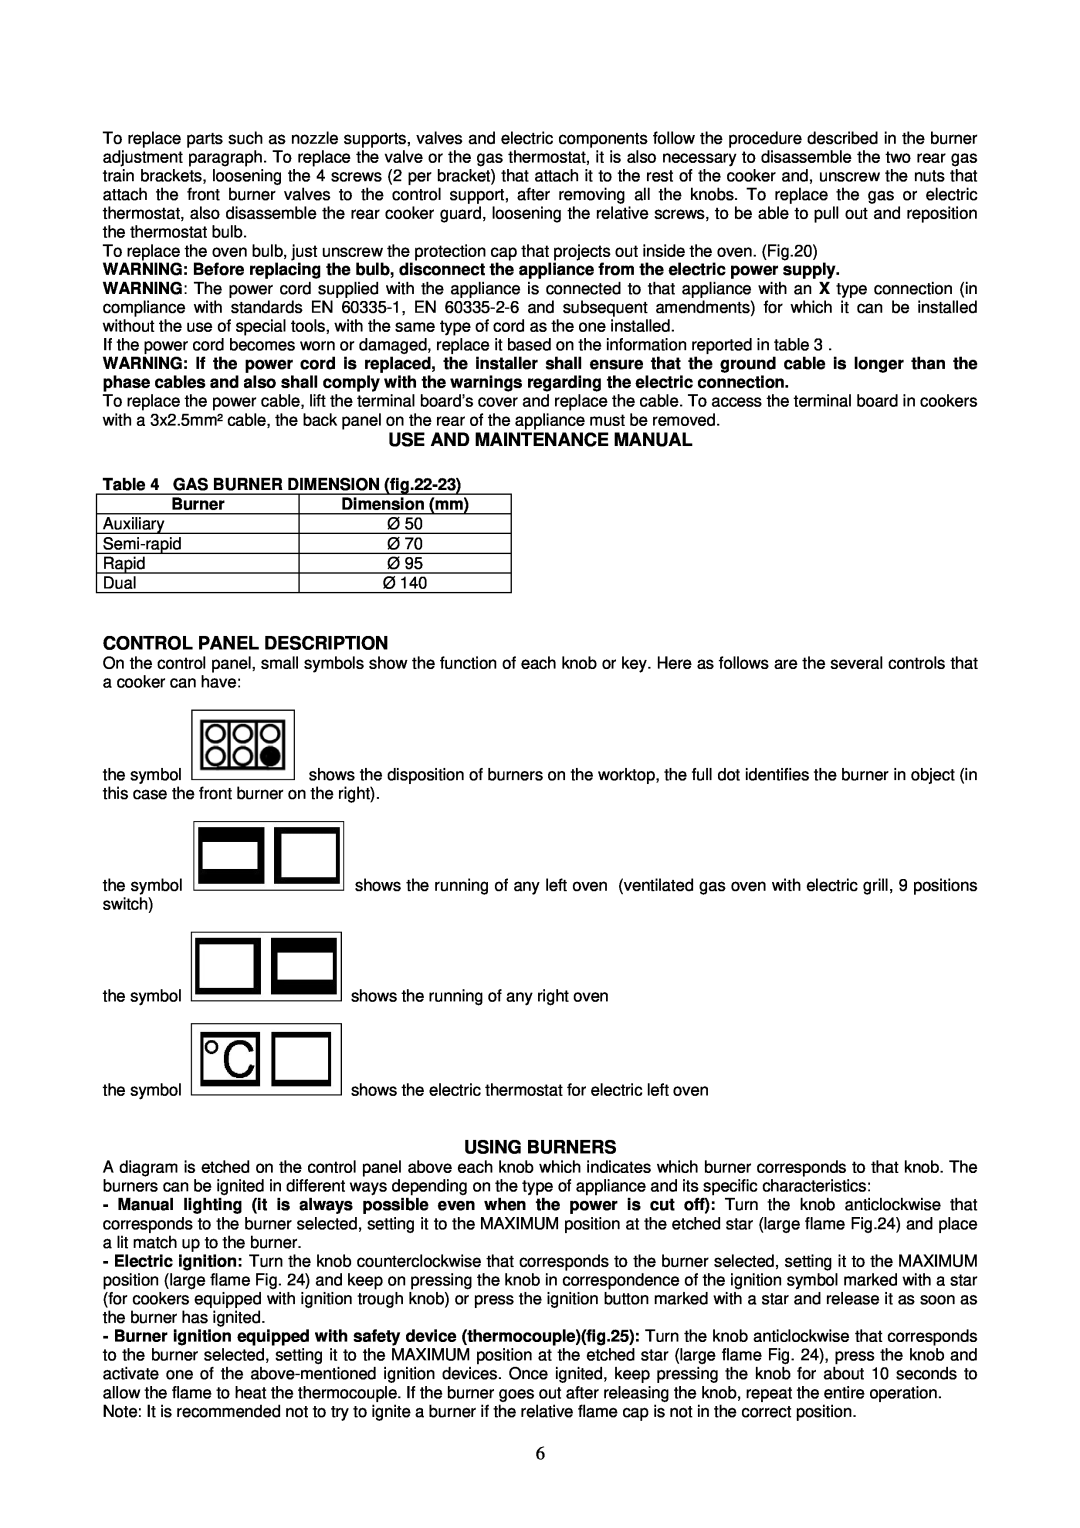 Bertazzoni M93V manual Use And Maintenance Manual, Control Panel Description, Using Burners 